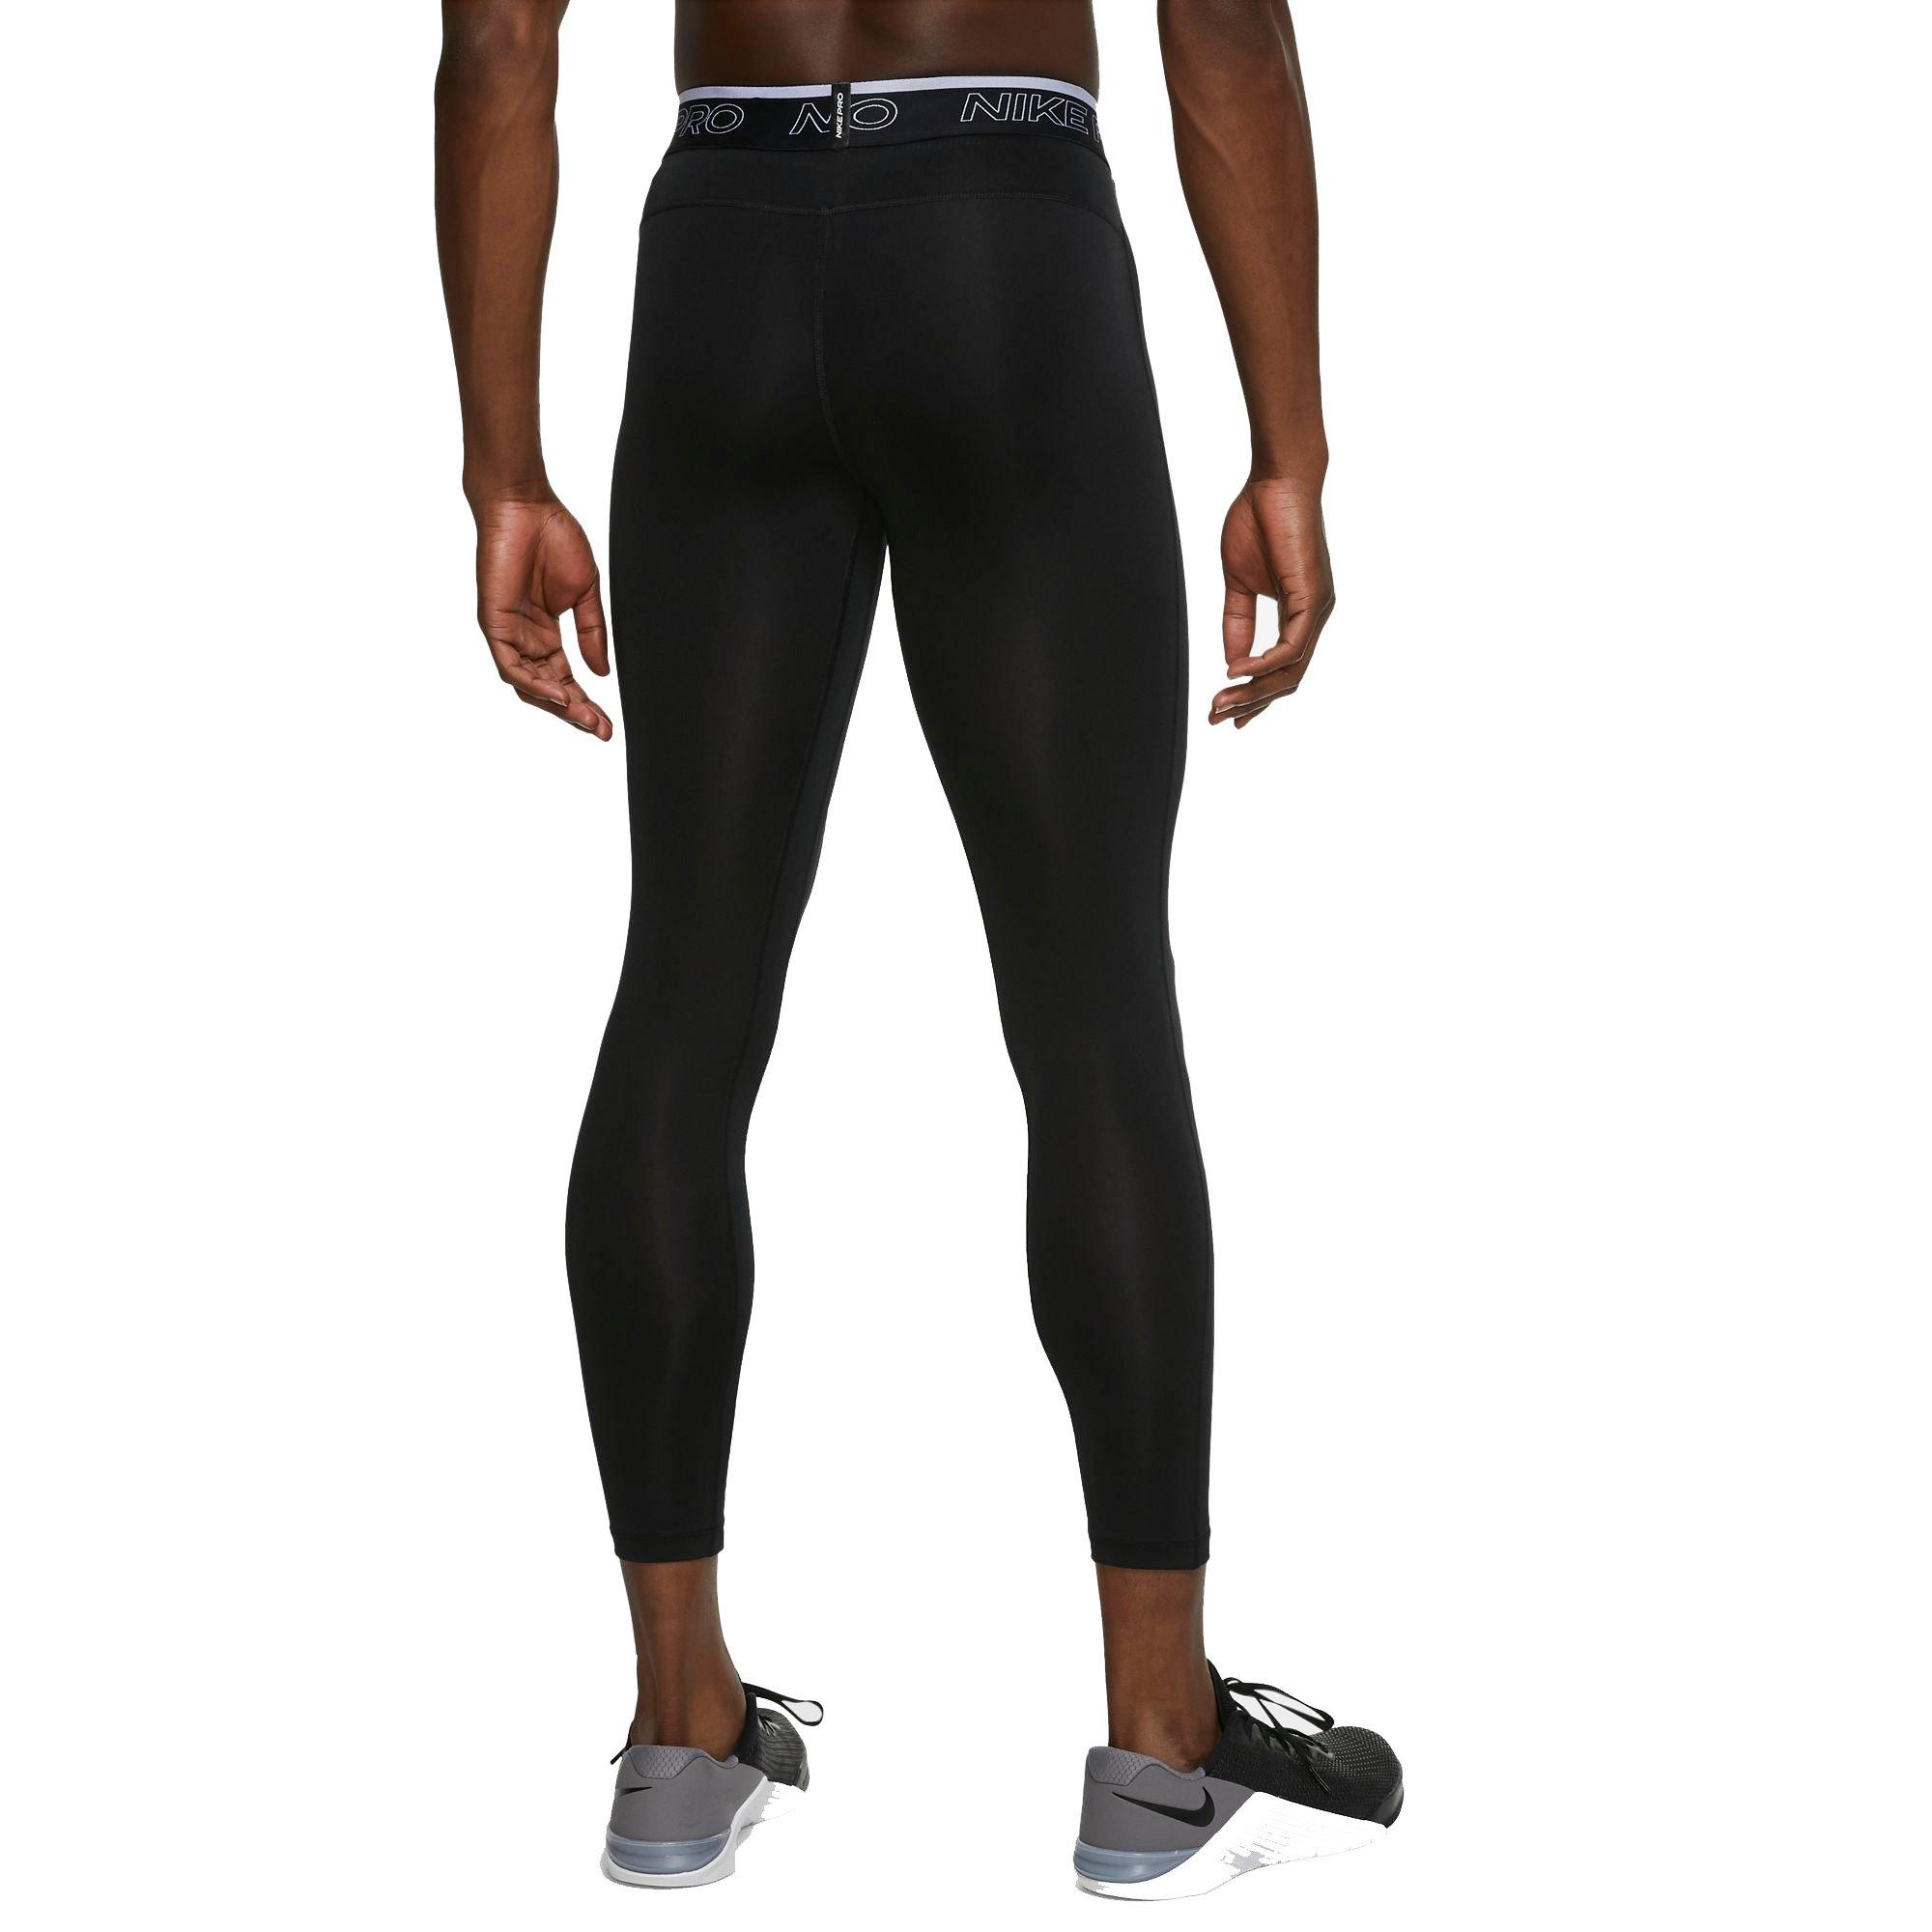 Nike Pro Warm Compression Leggings-Black - Hibbett